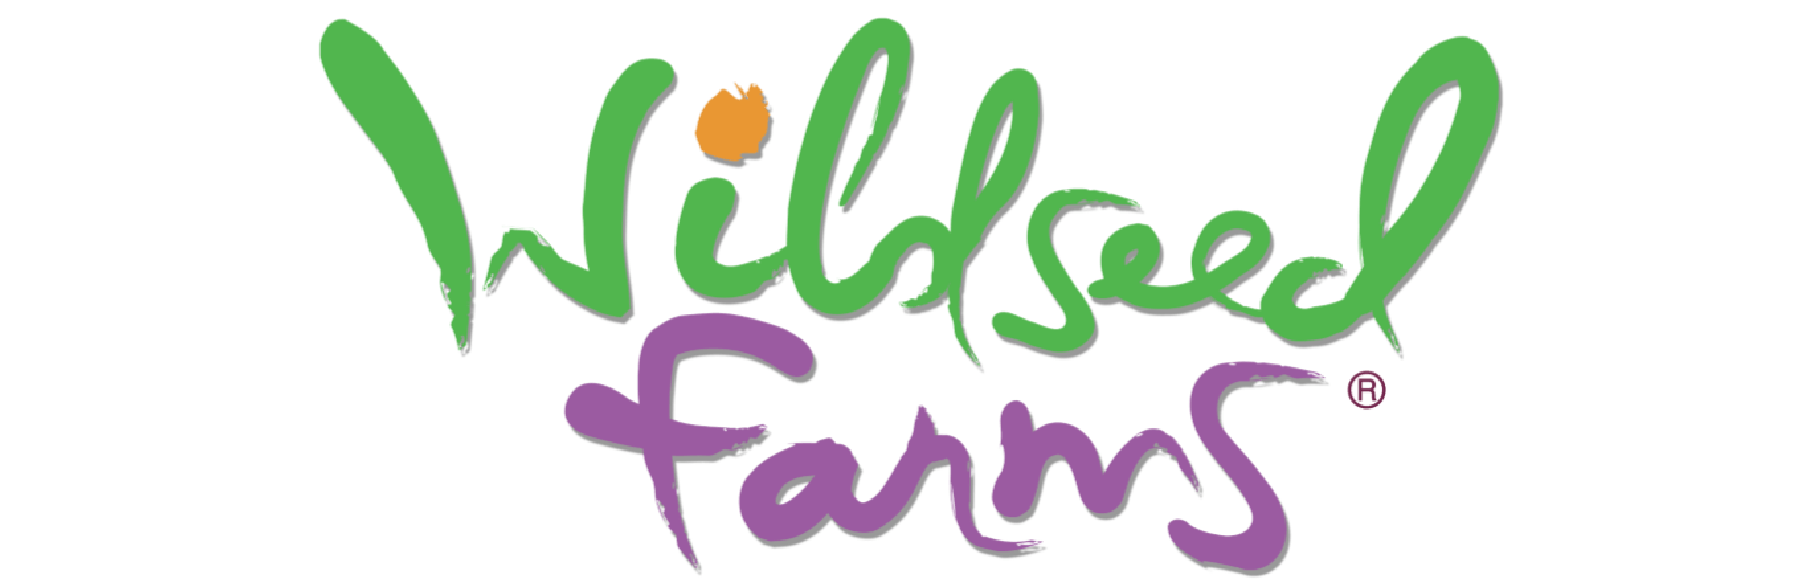 Wildseed Farms Logo